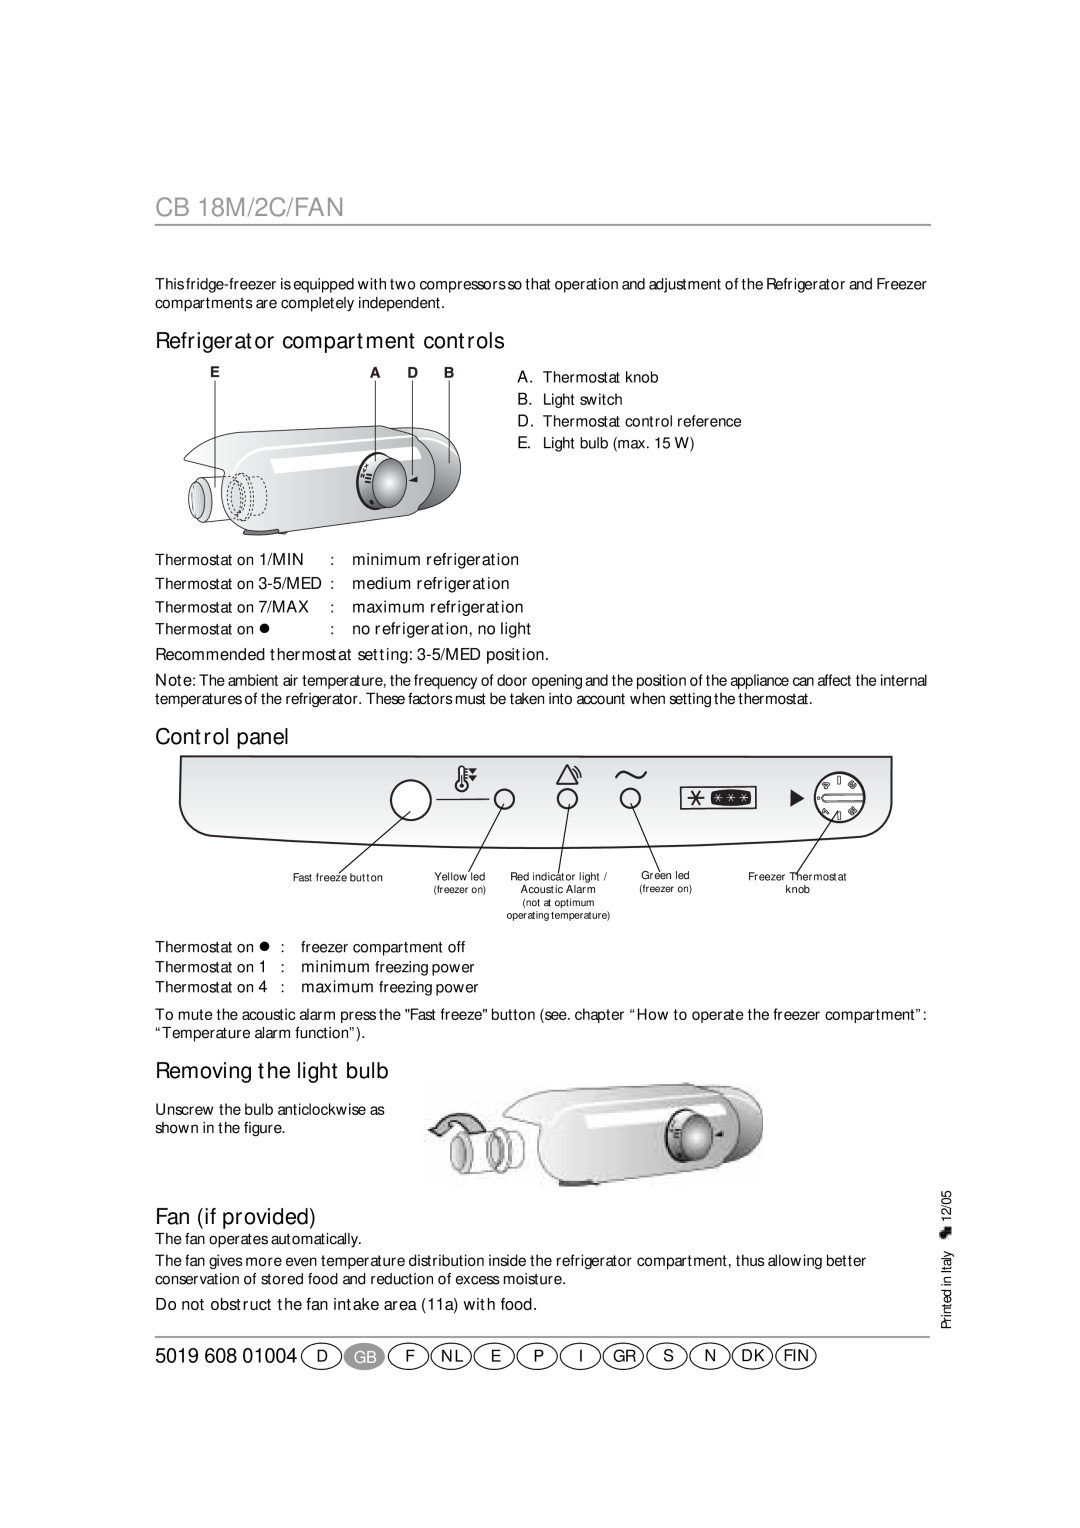 Smeg CR327AV1 Refrigerator compartment controls, Control panel, Removing the light bulb, Fan if provided, CB 18M/2C/FAN 